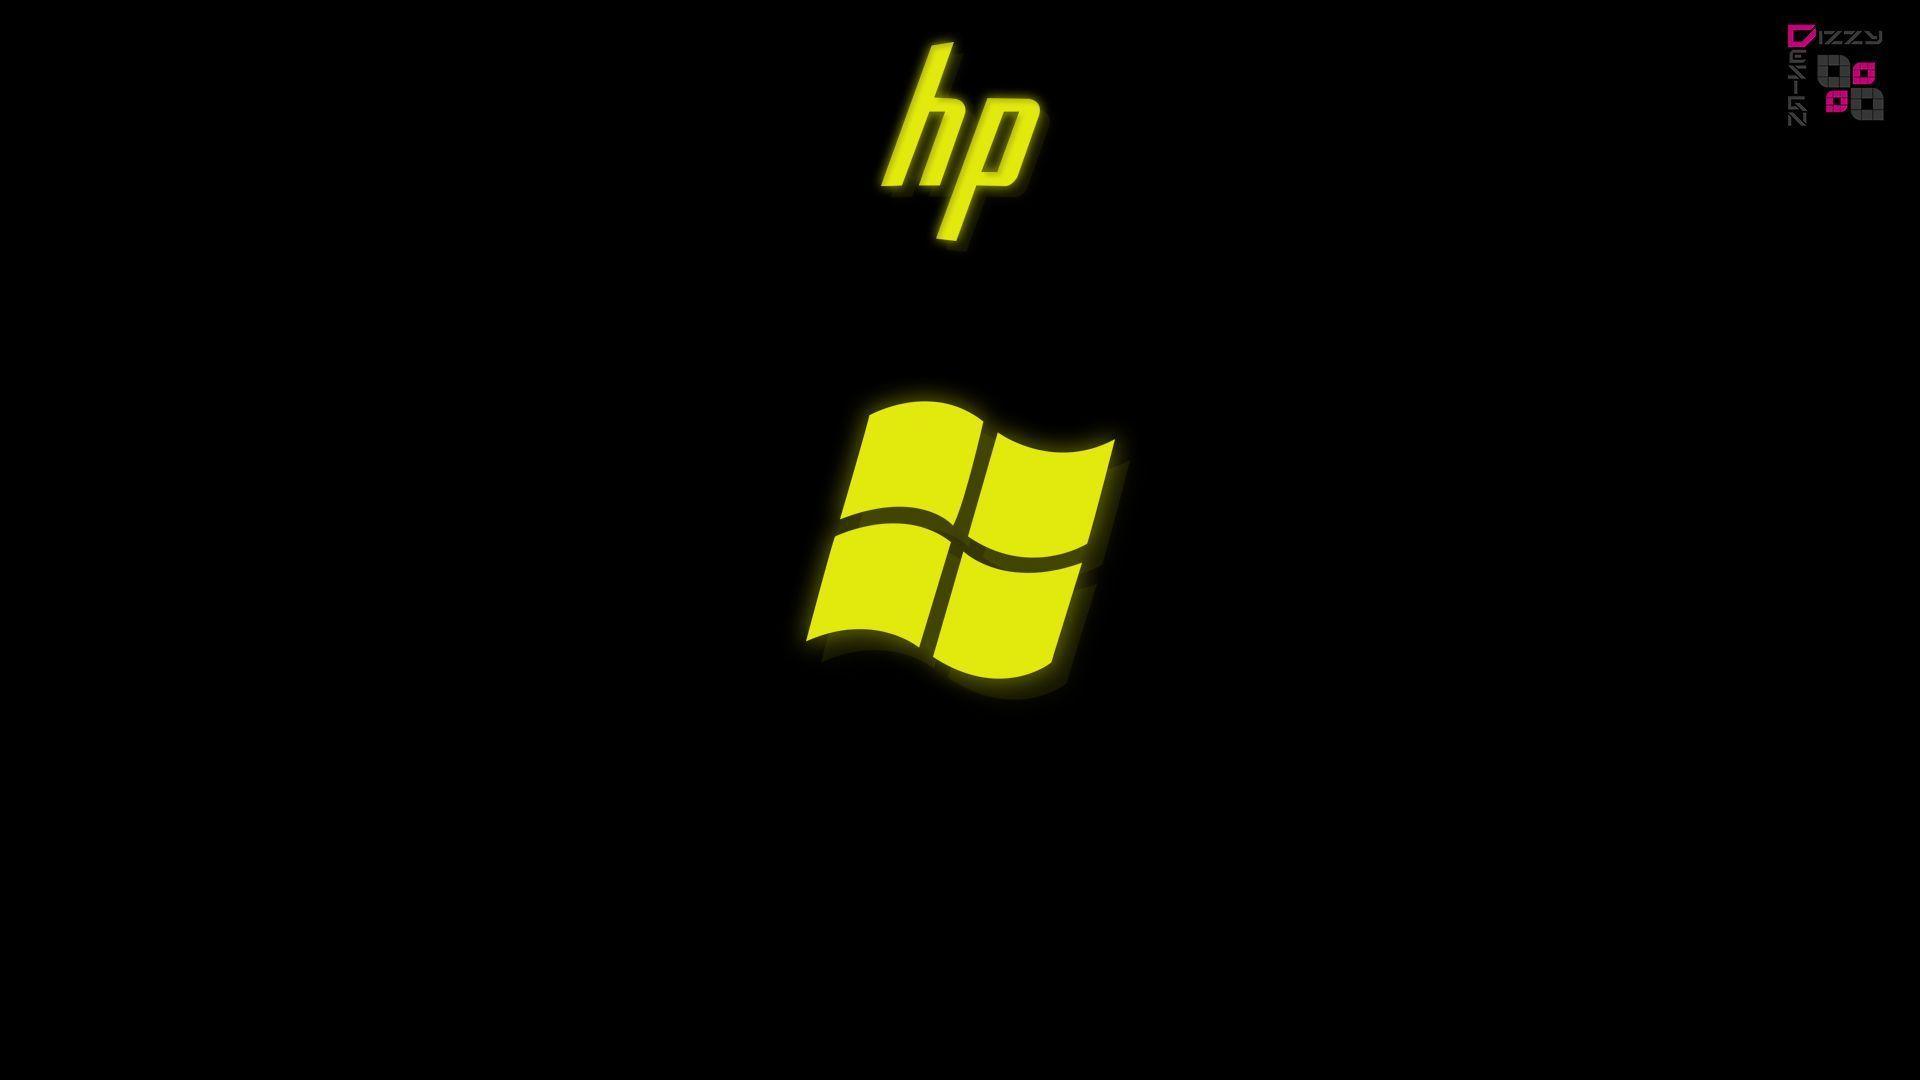 Hp and Windows Wallpaper HD